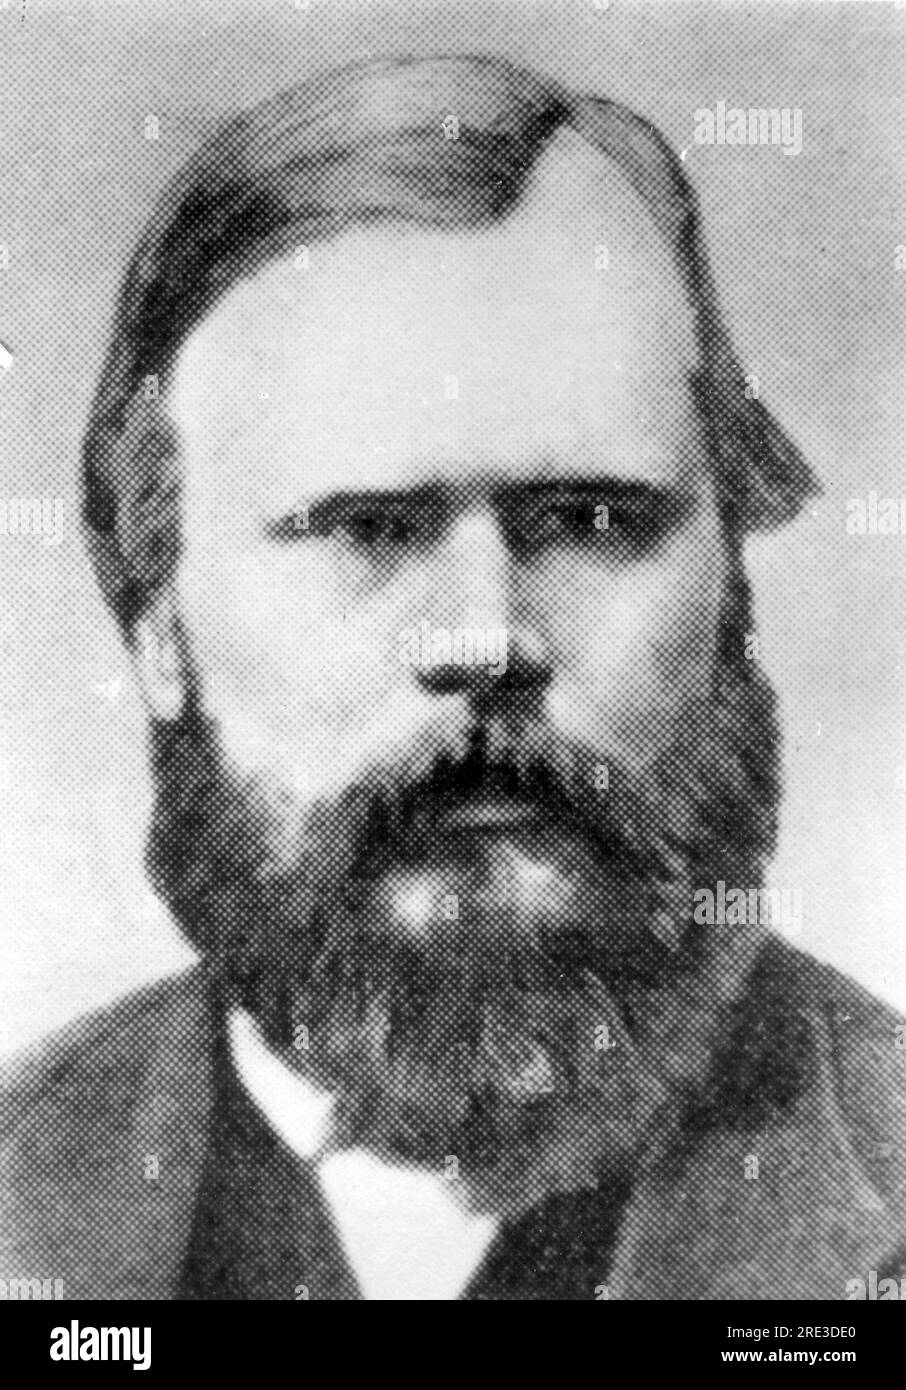 Moore, Samuel, 1830 - 1912, giudice britannico, traduttore di "Das Kapital" (capitale) in inglese, ADDITIONAL-RIGHTS-CLEARANCE-INFO-NOT-AVAILABLE Foto Stock